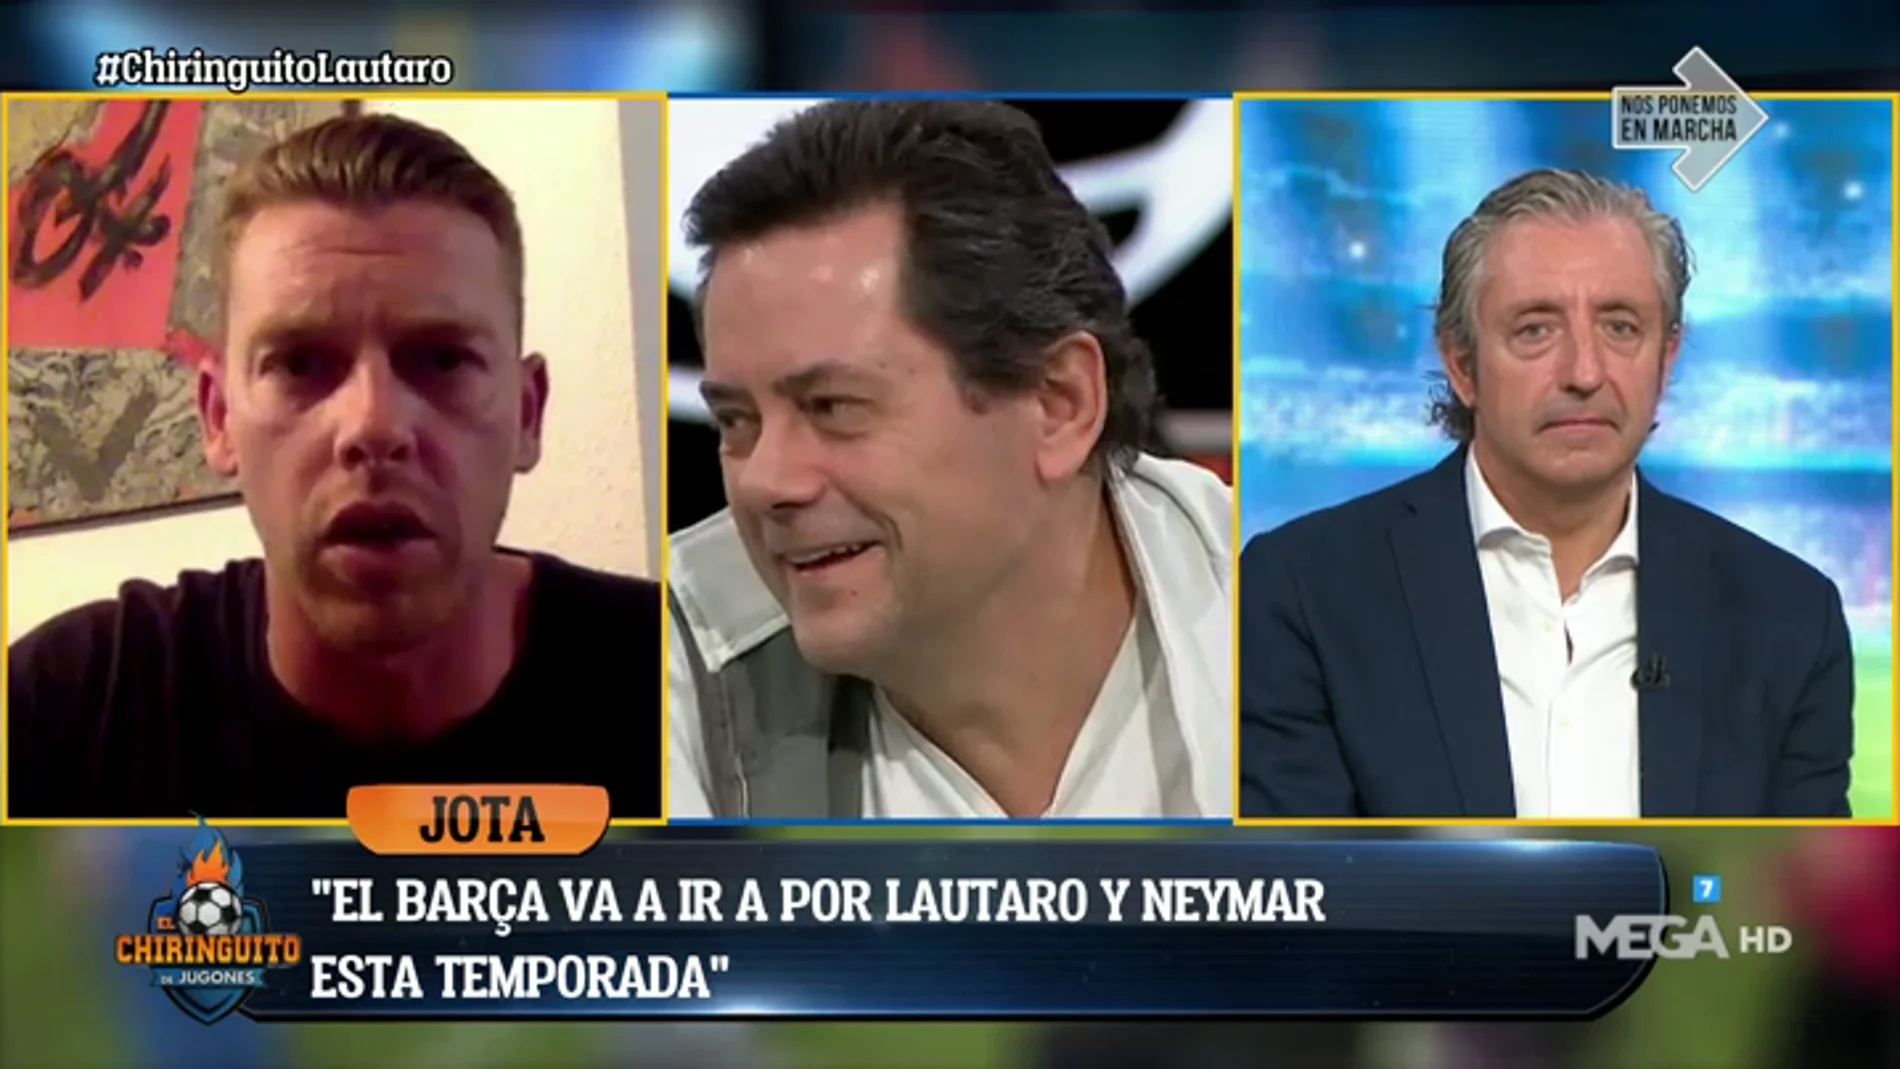 JOTA JORDI: "El Barça irá a por Lautaro y Neymar" 